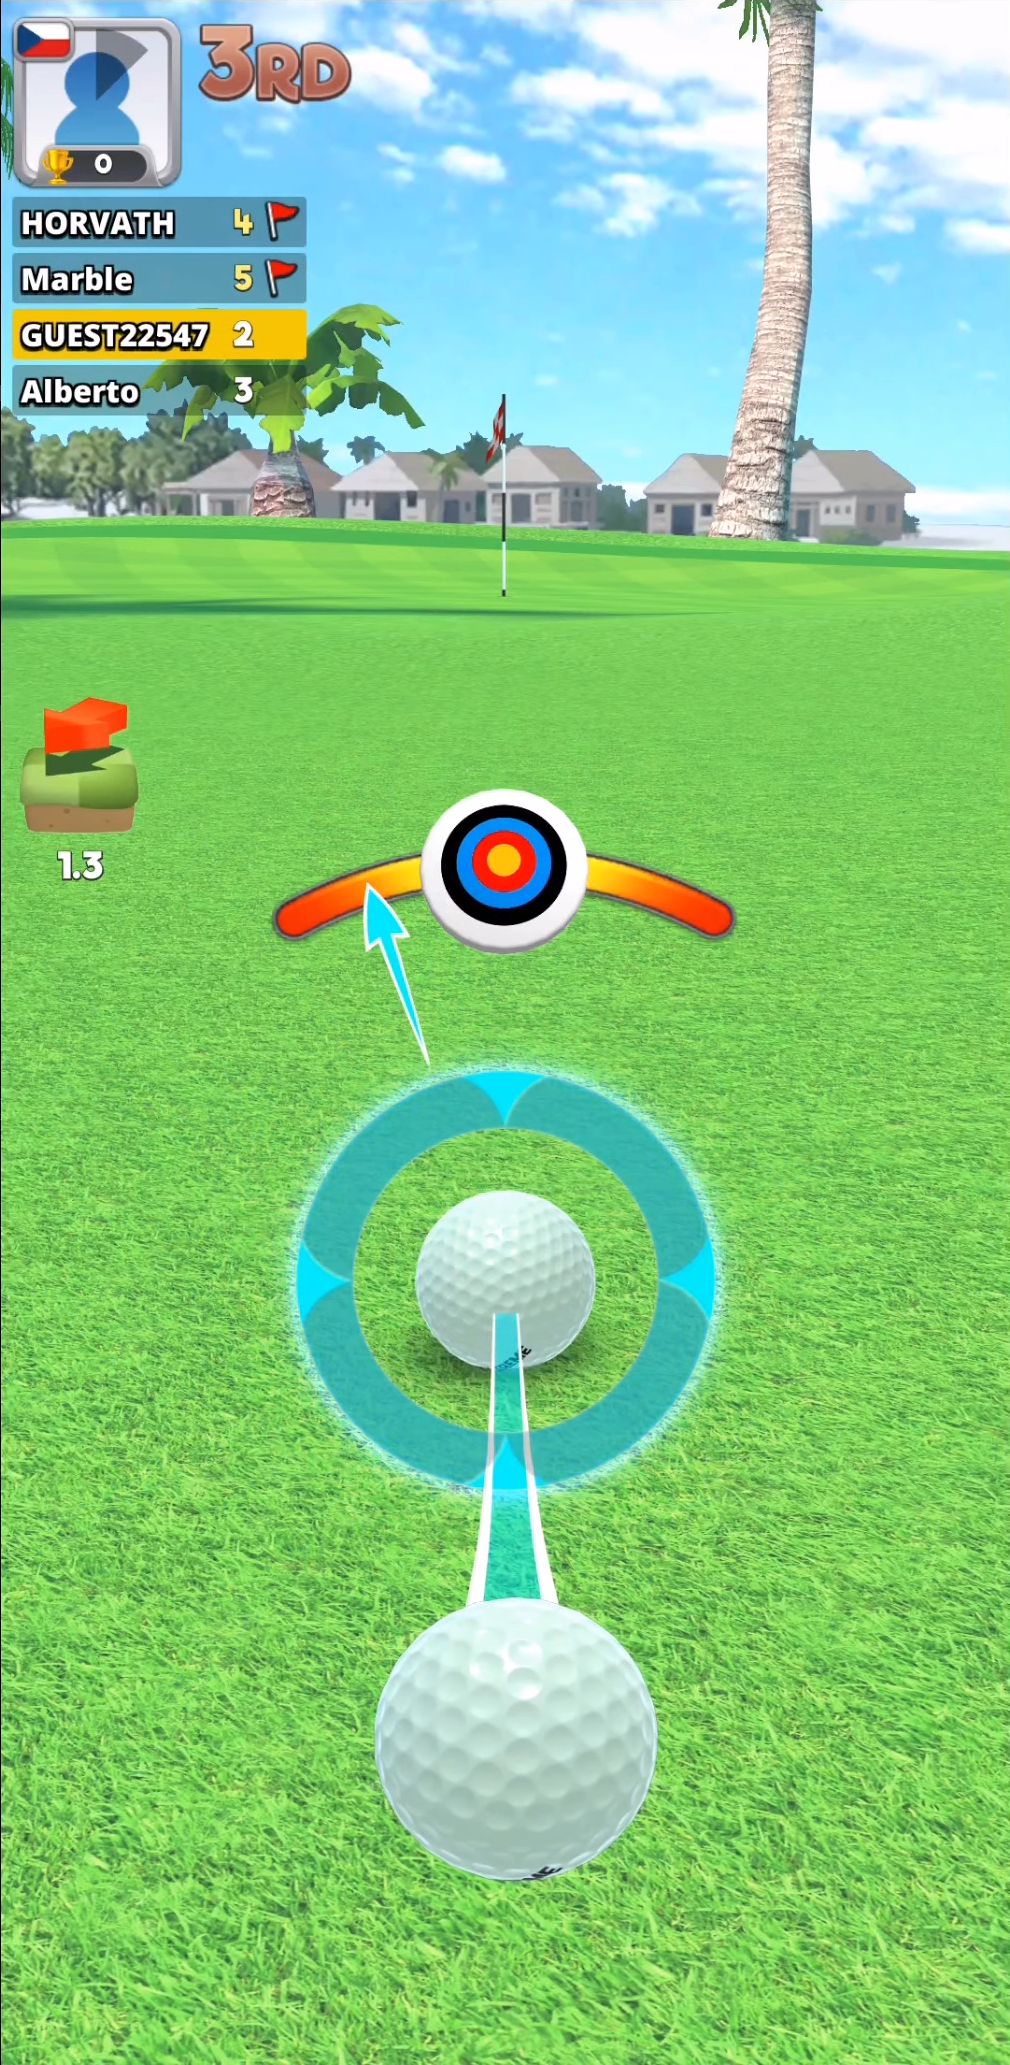 Extreme Golf - 4 Player Battle captura de tela 1